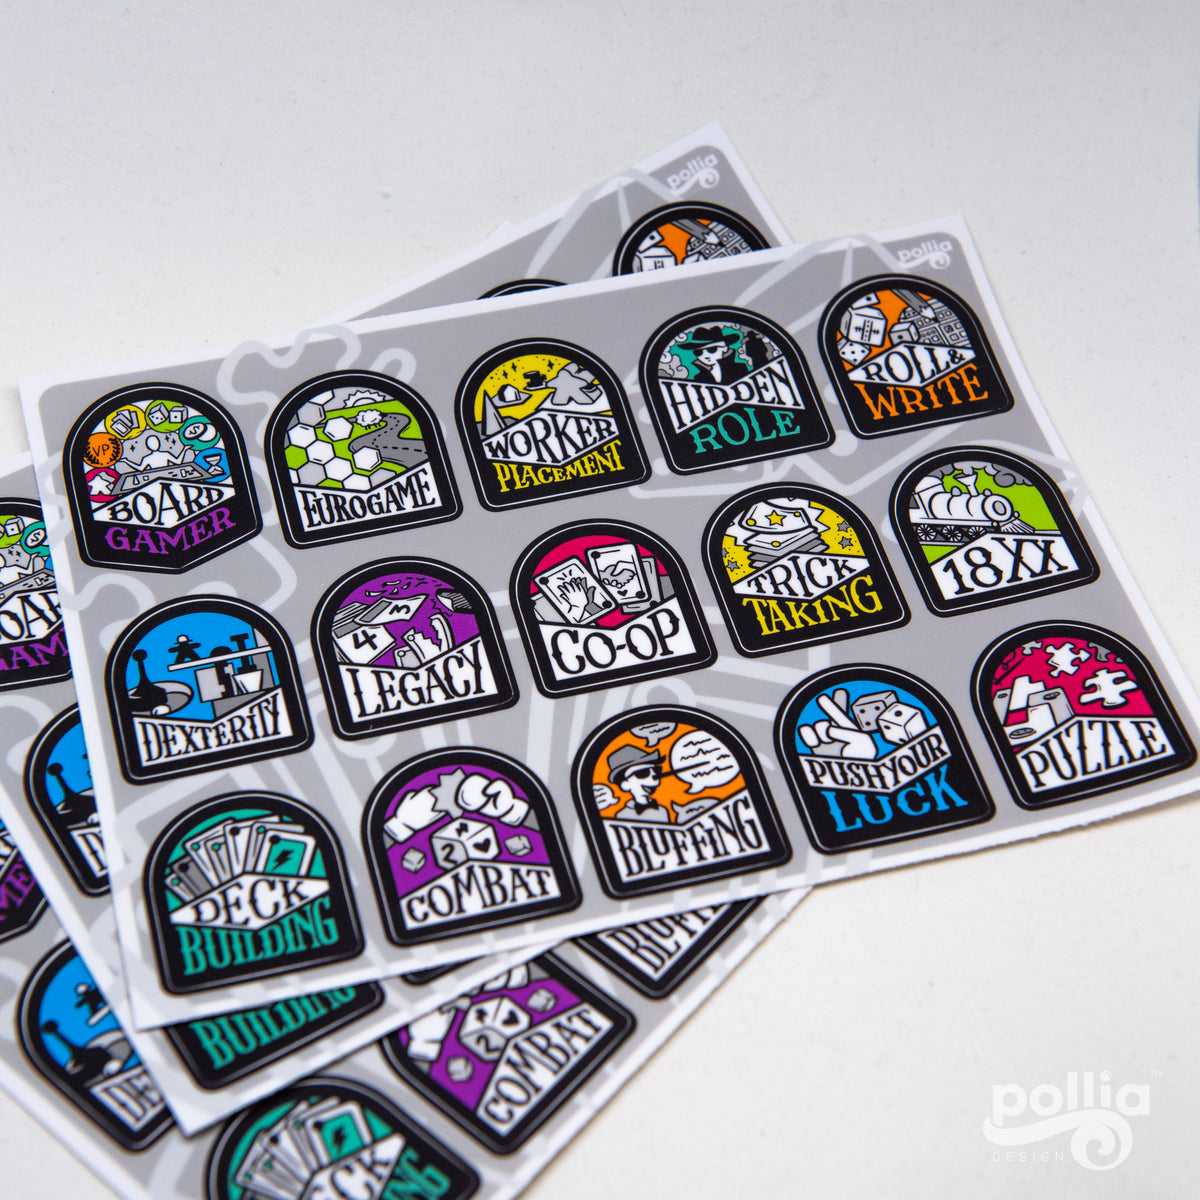 Board Game Genre Enamel Pins – Pollia Design